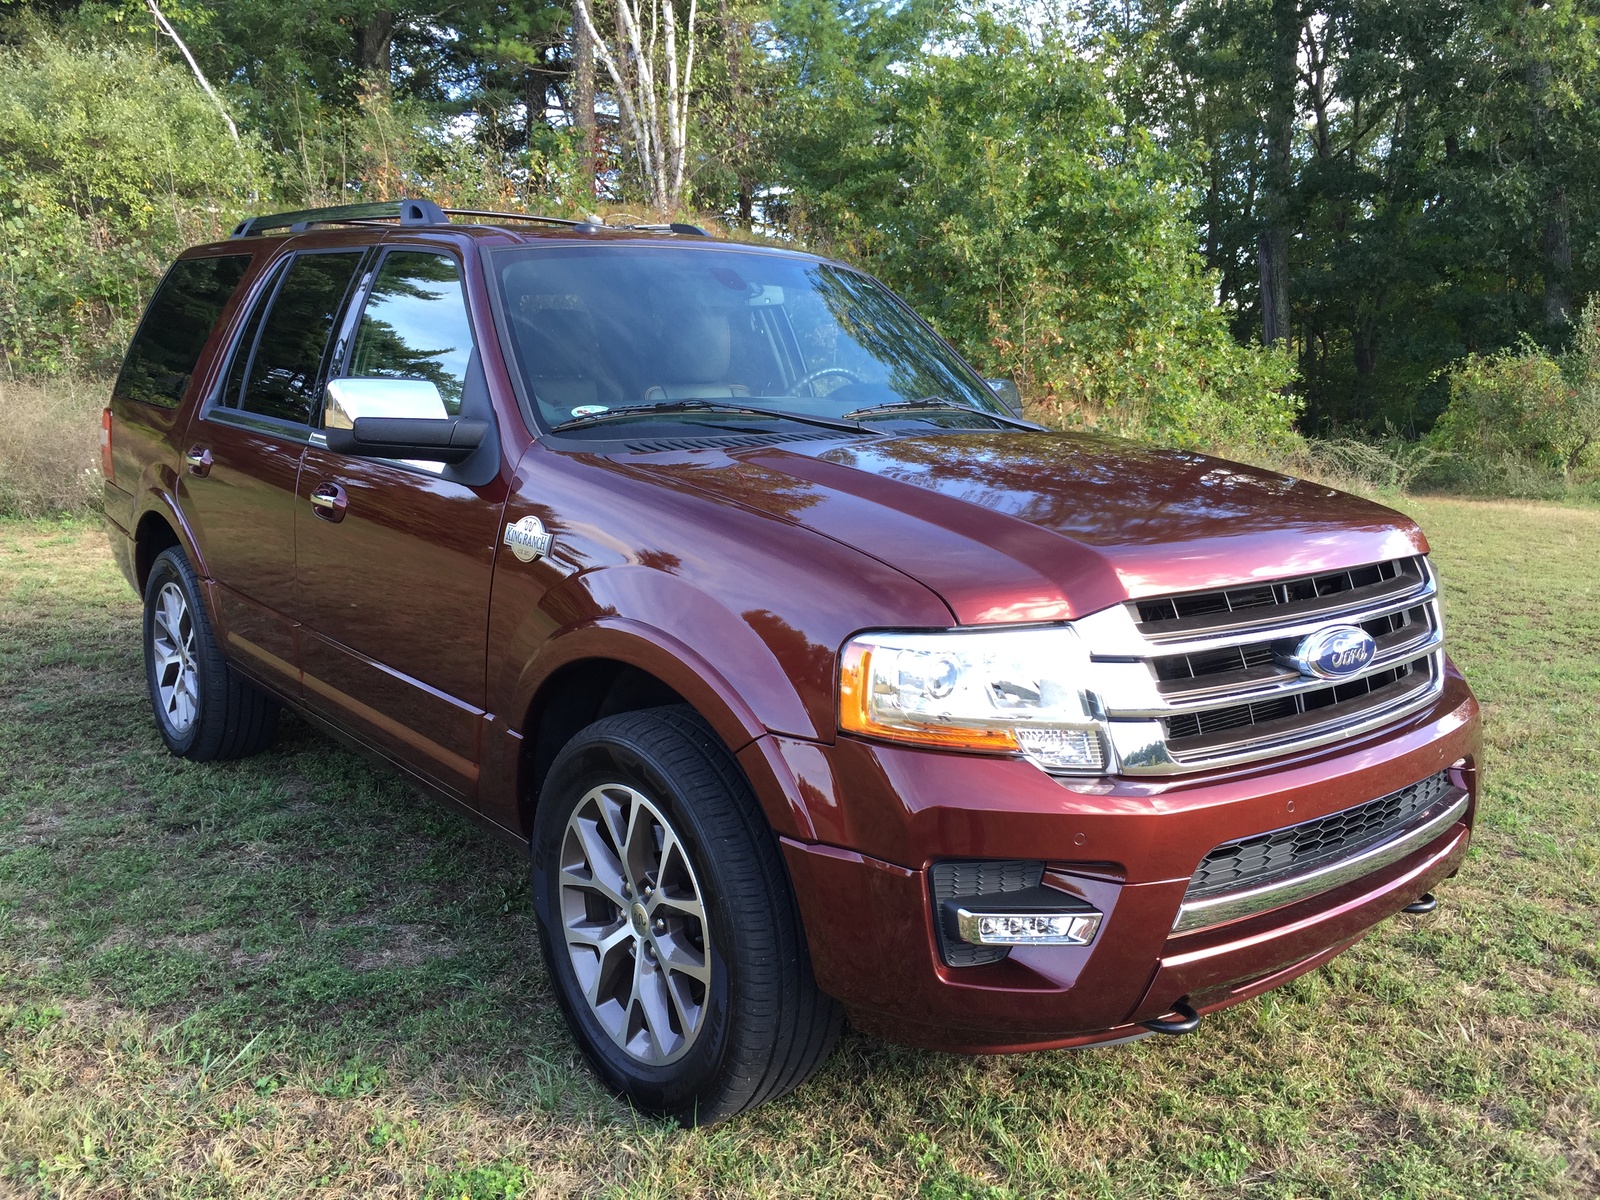 New 2015 \/ 2016 Ford Expedition For Sale Atlanta, GA  CarGurus